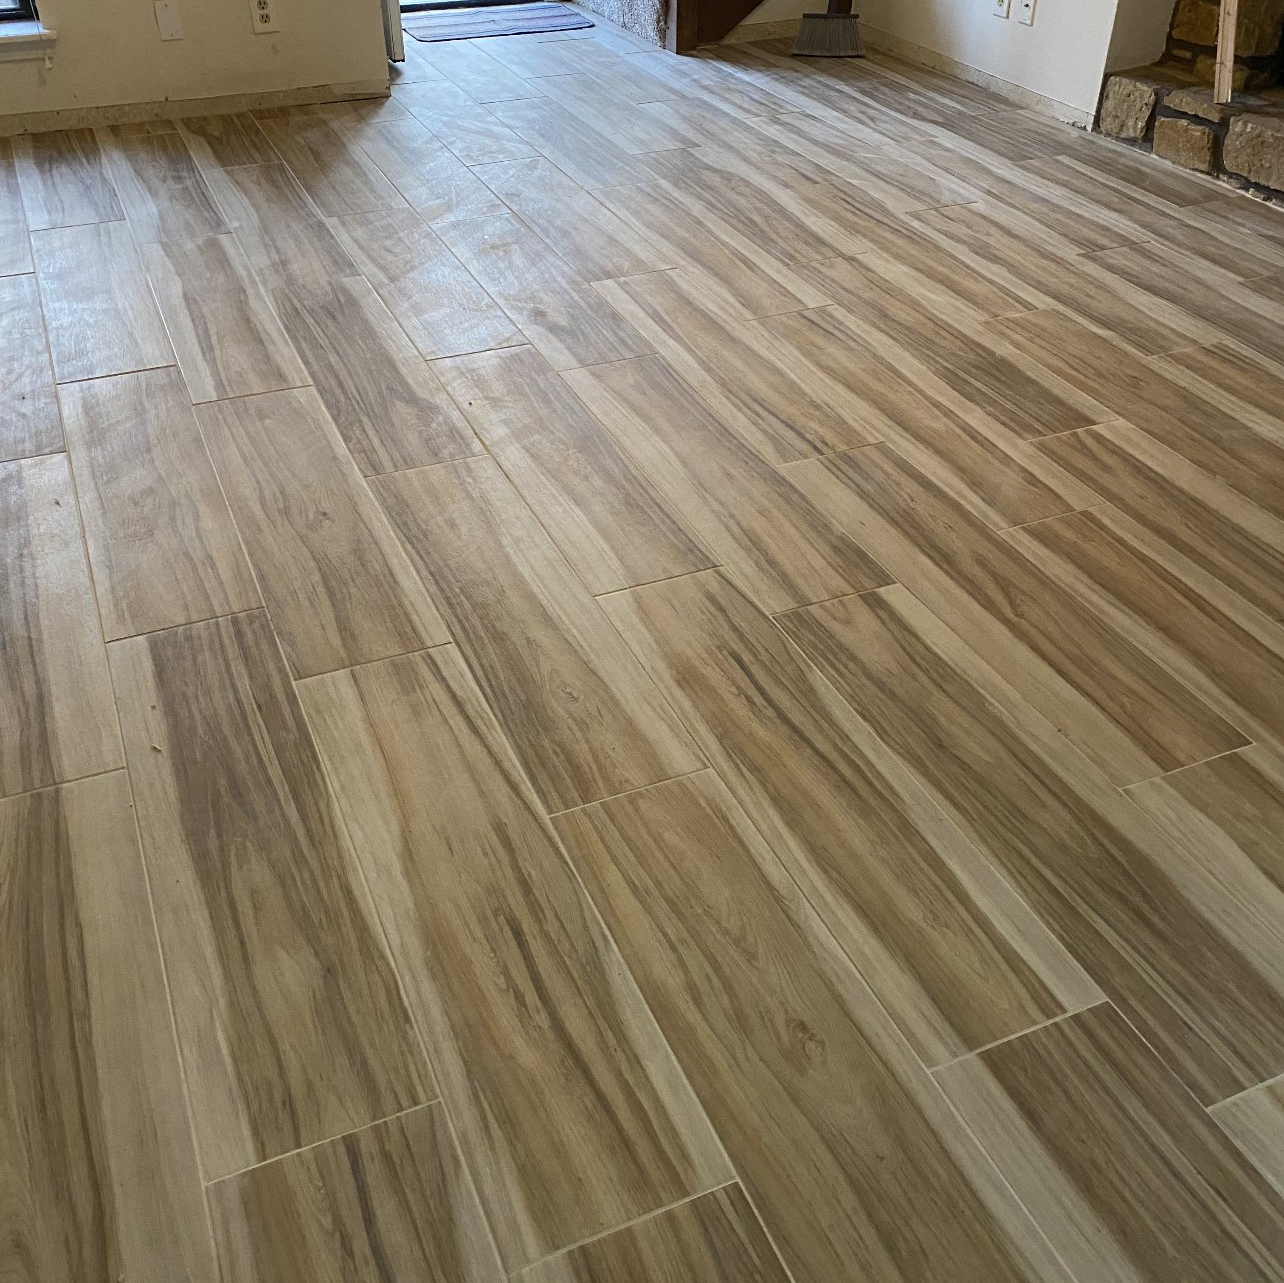 Wood look plank tile flooring